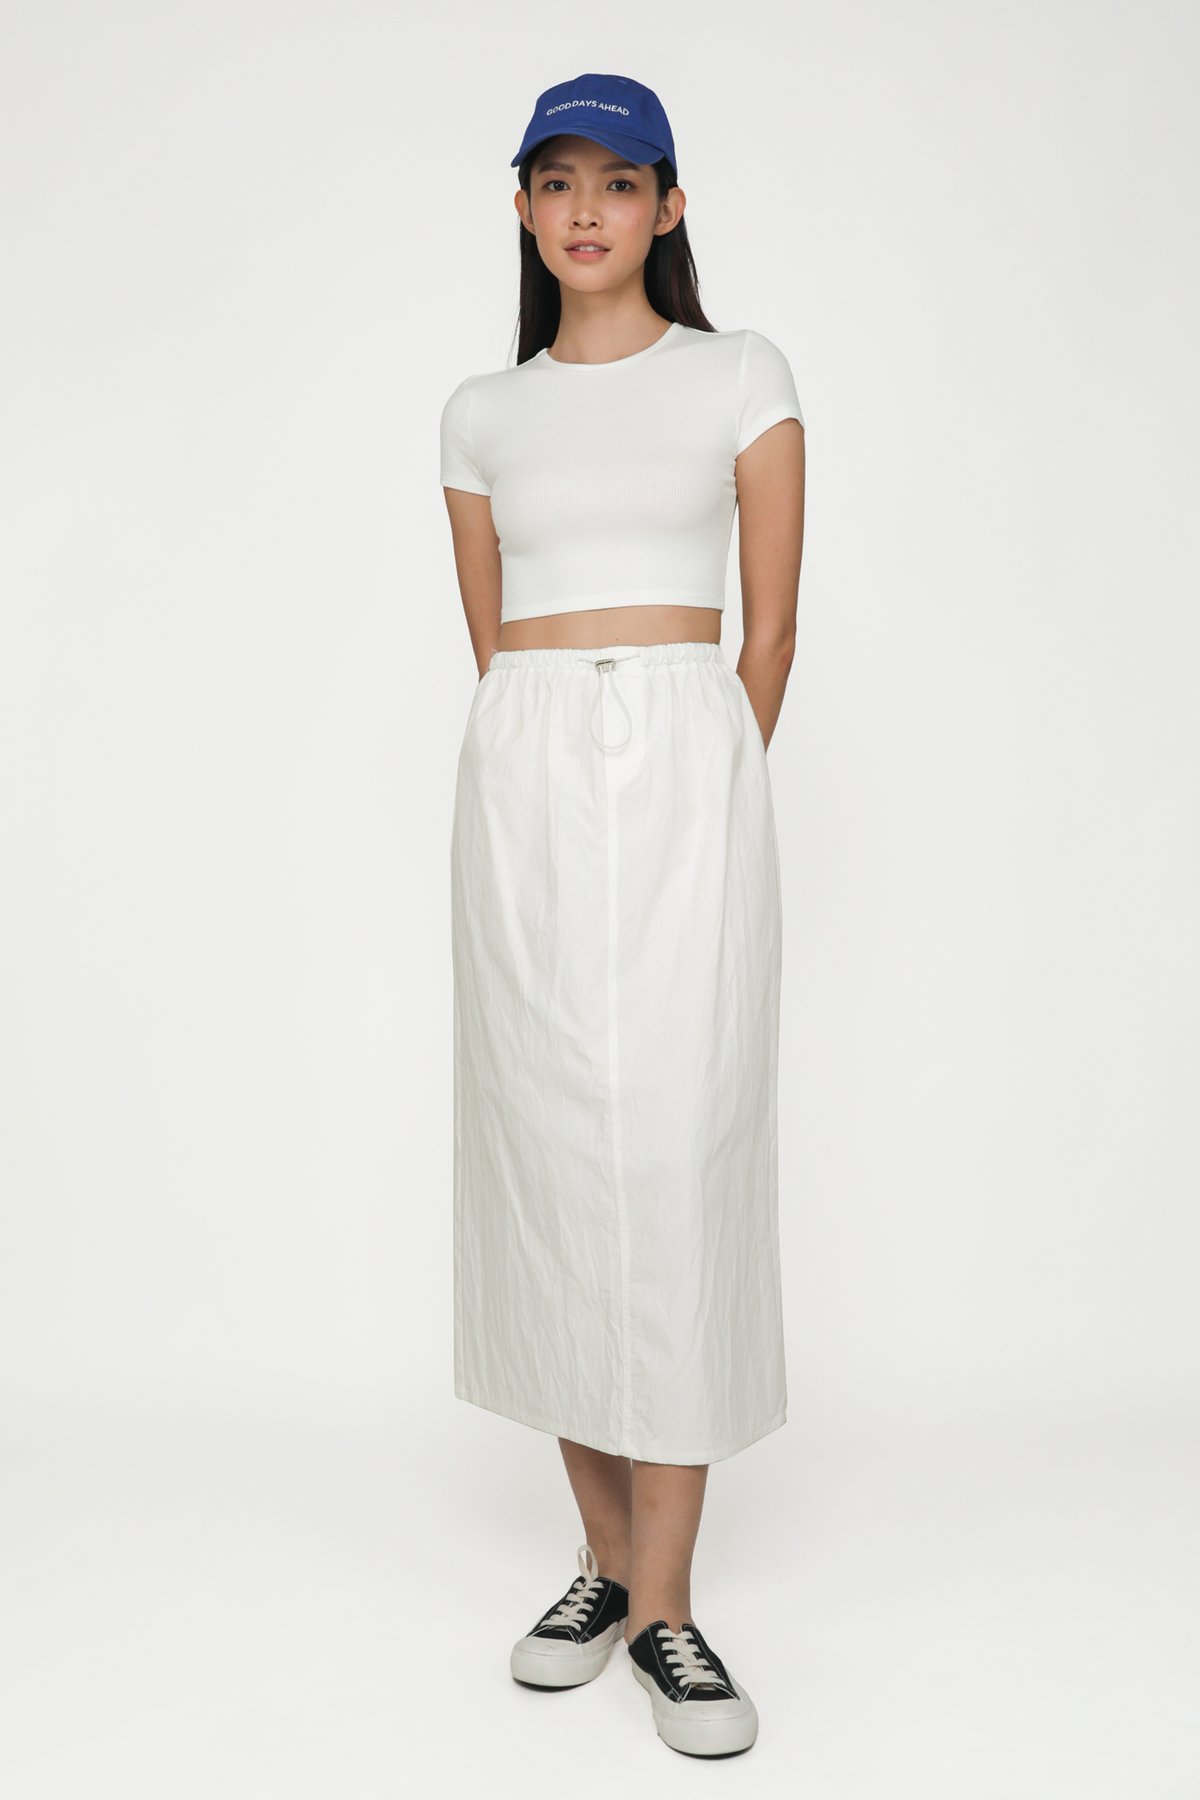 Fallon Parachute Drawstring Skirt (White)